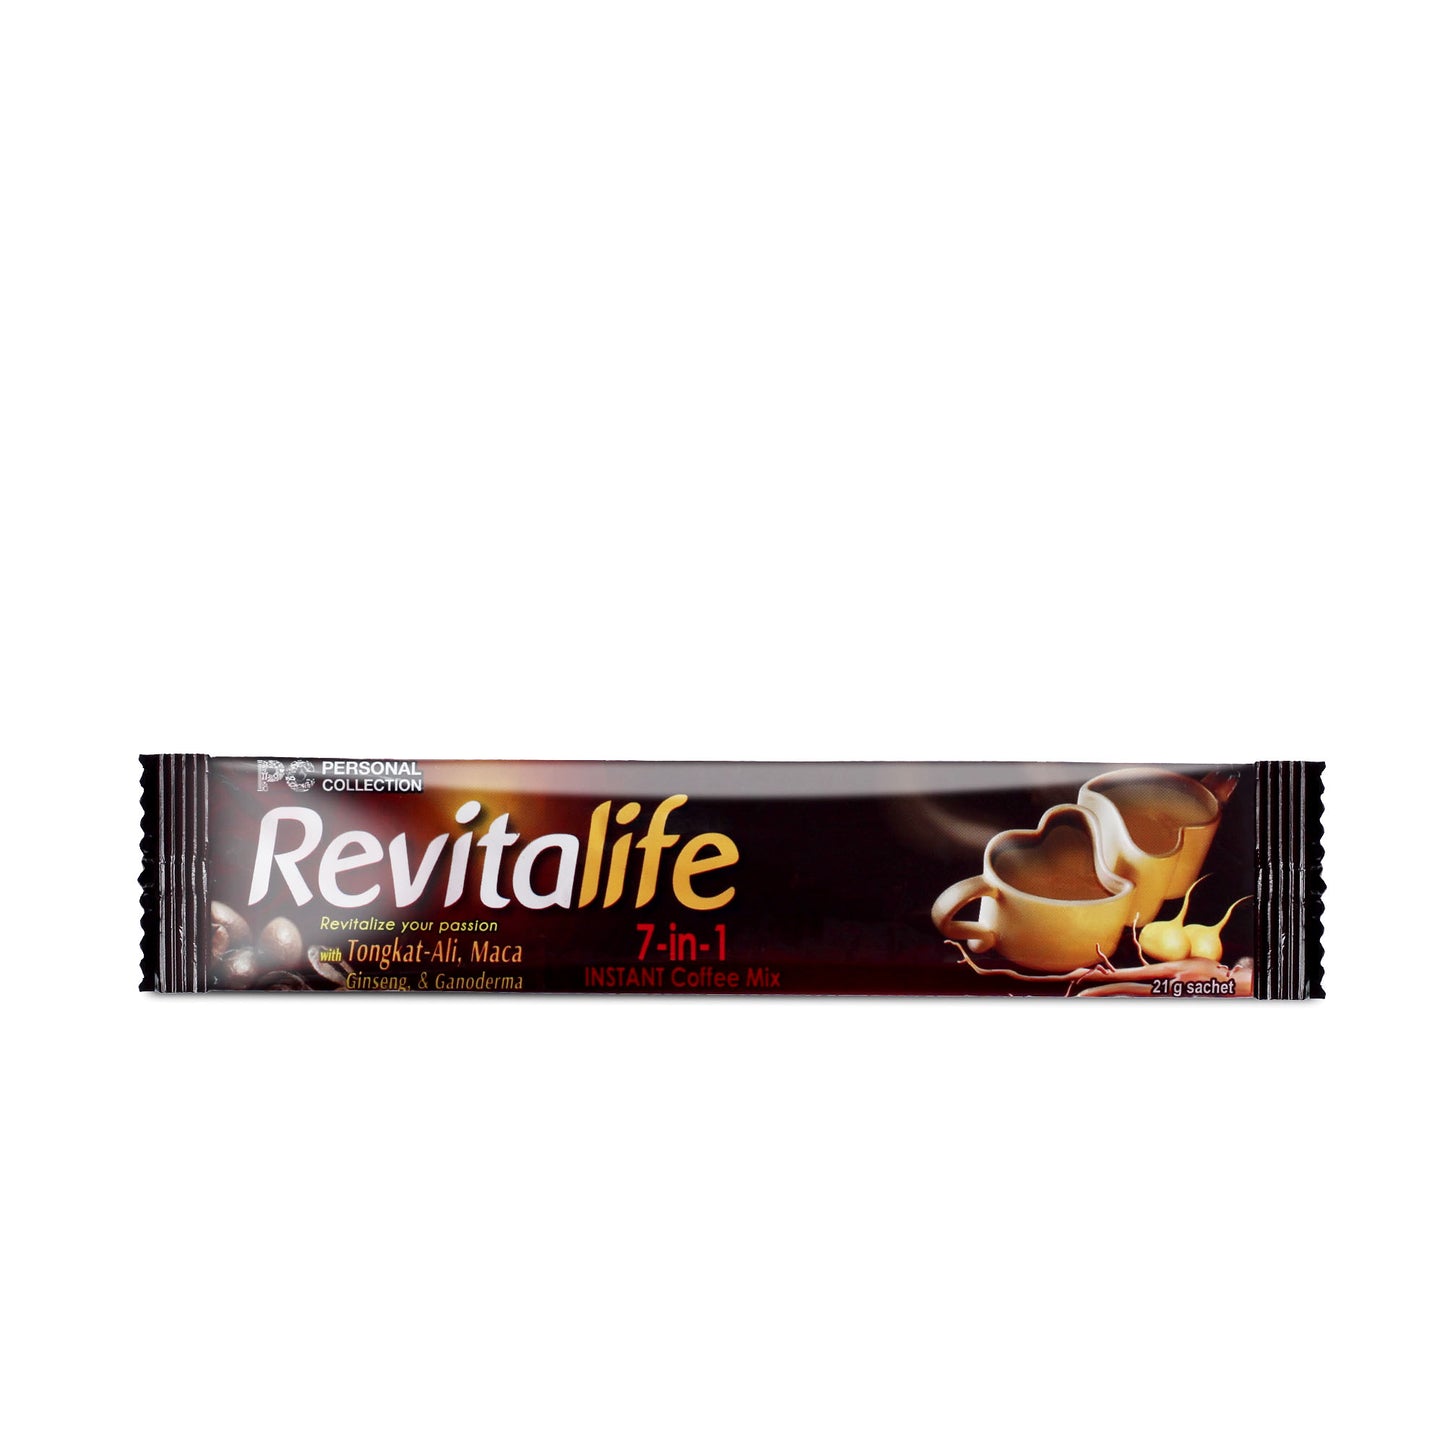 Revitalife Tongkat-Ali 7-in-1 Instant Coffe Mix 21g x 20 stick sachet/box